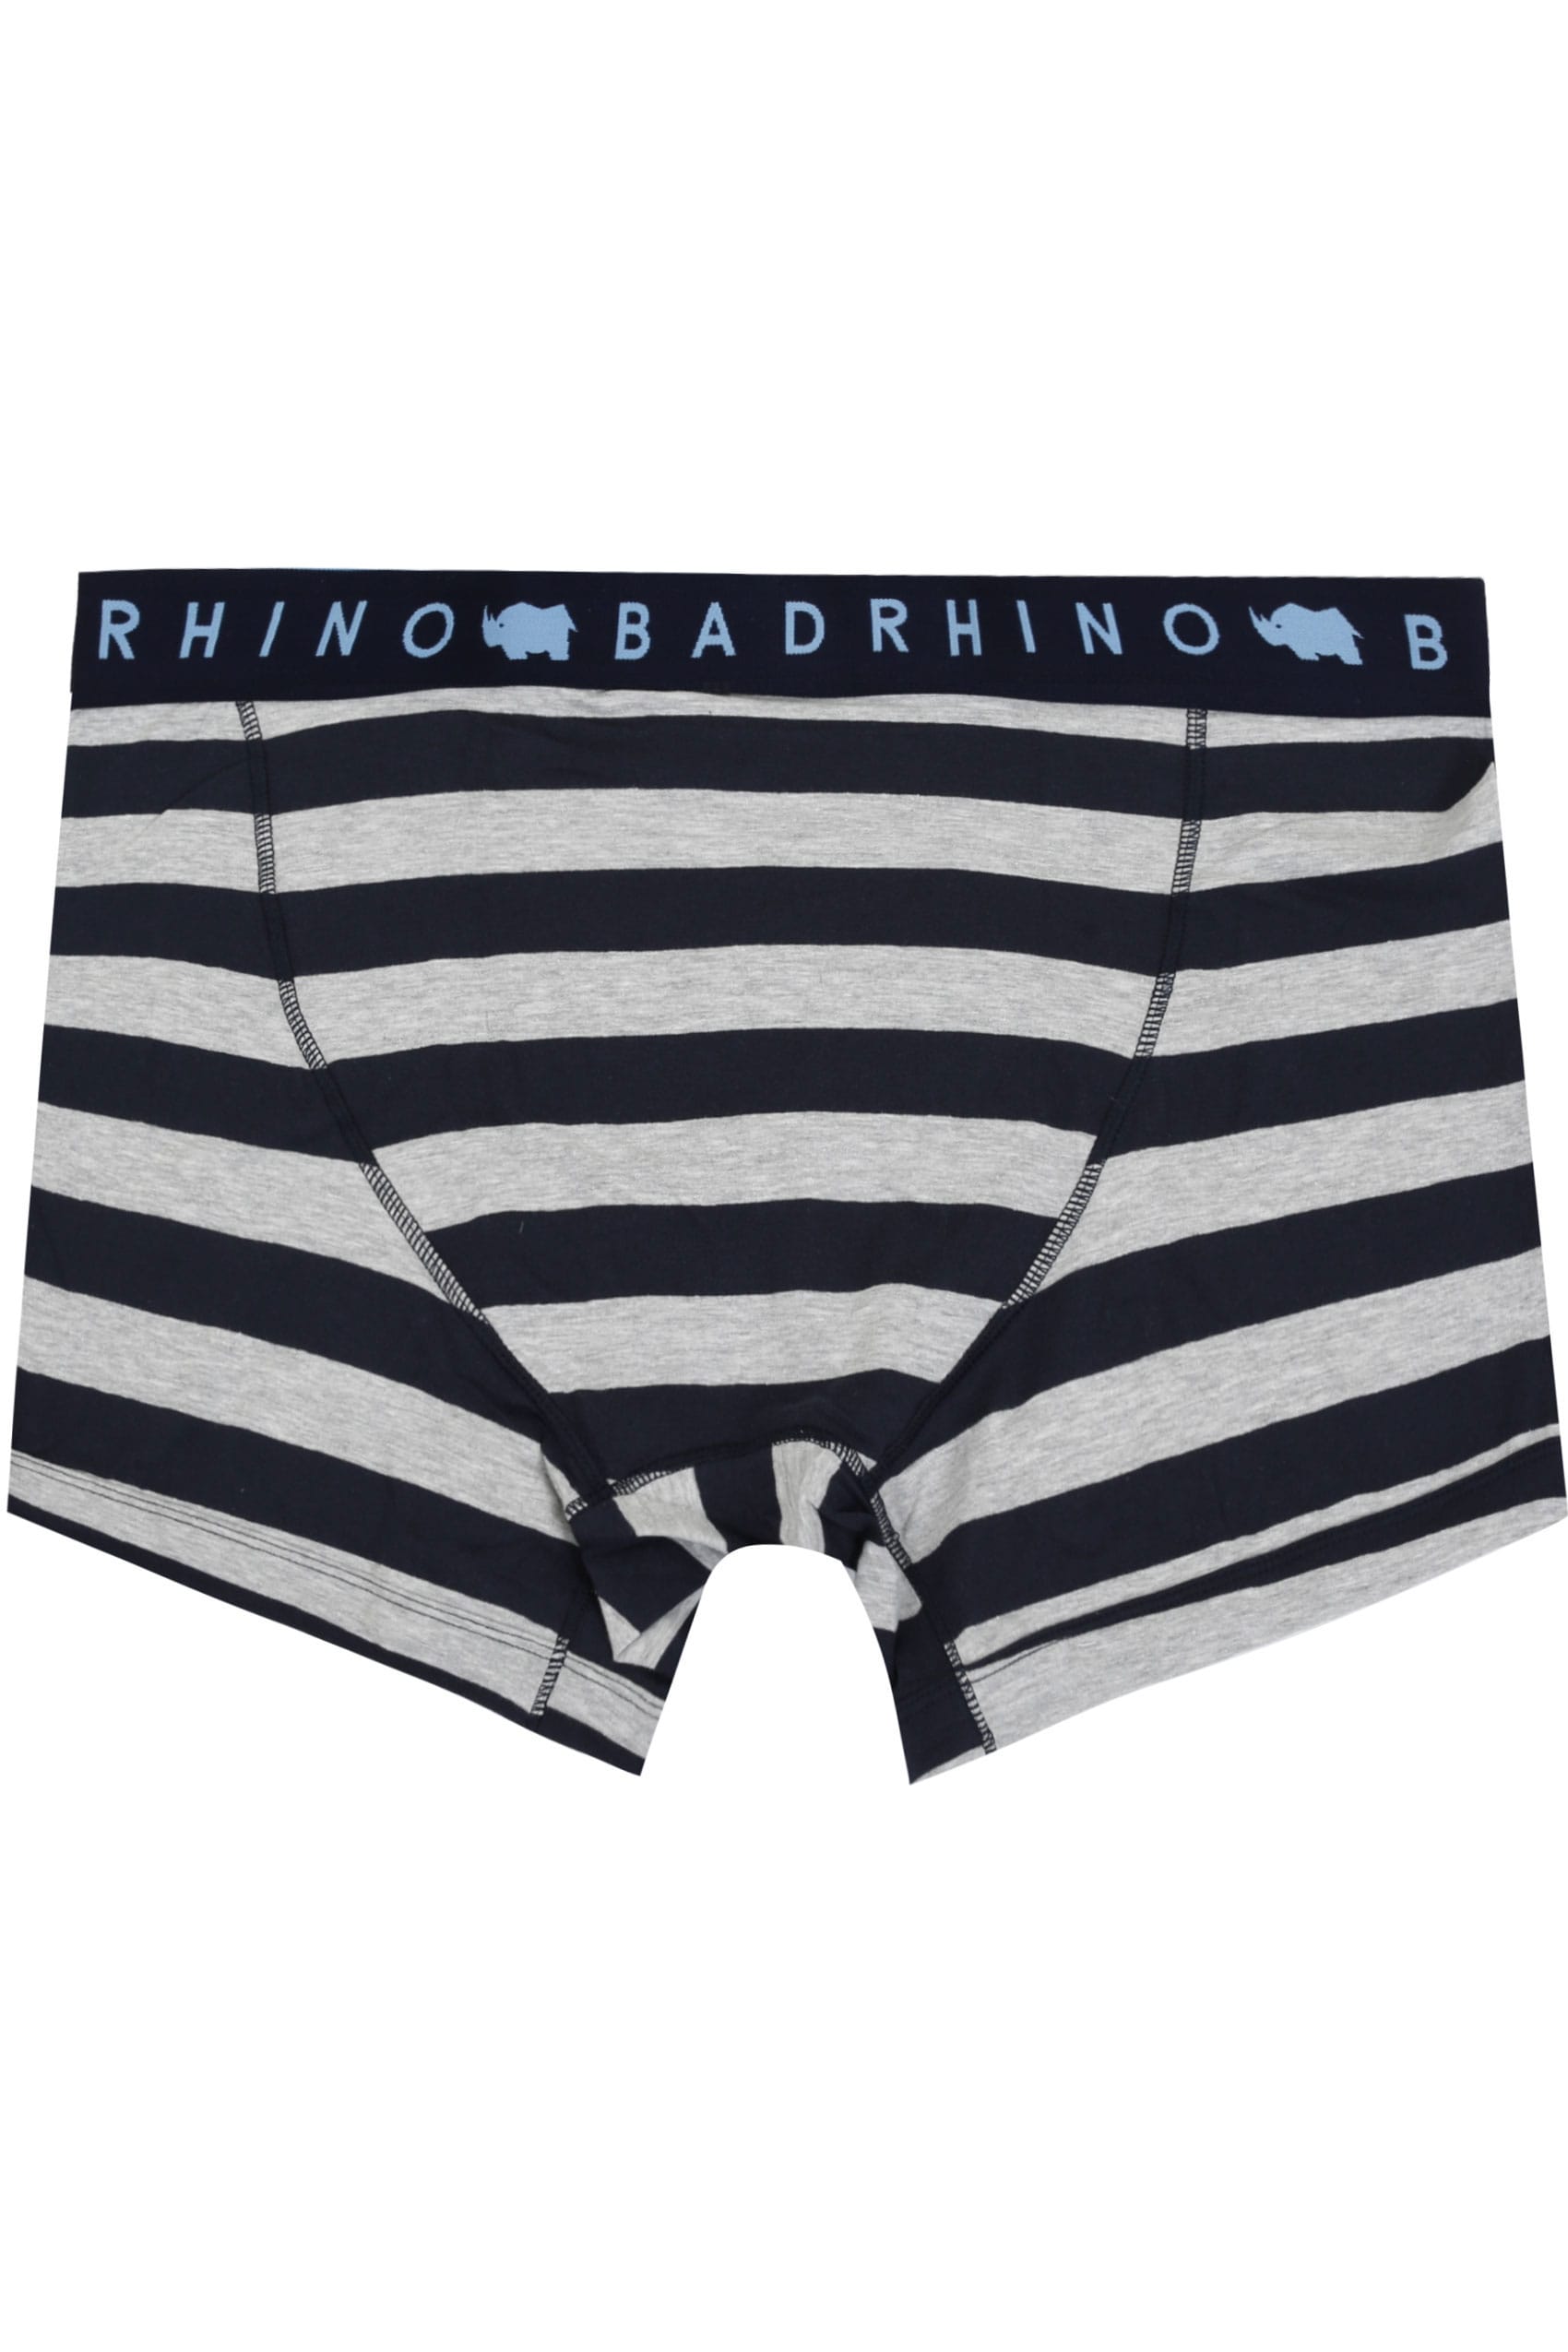 BadRhino Navy & Grey Block Striped A Front Boxers | BadRhino